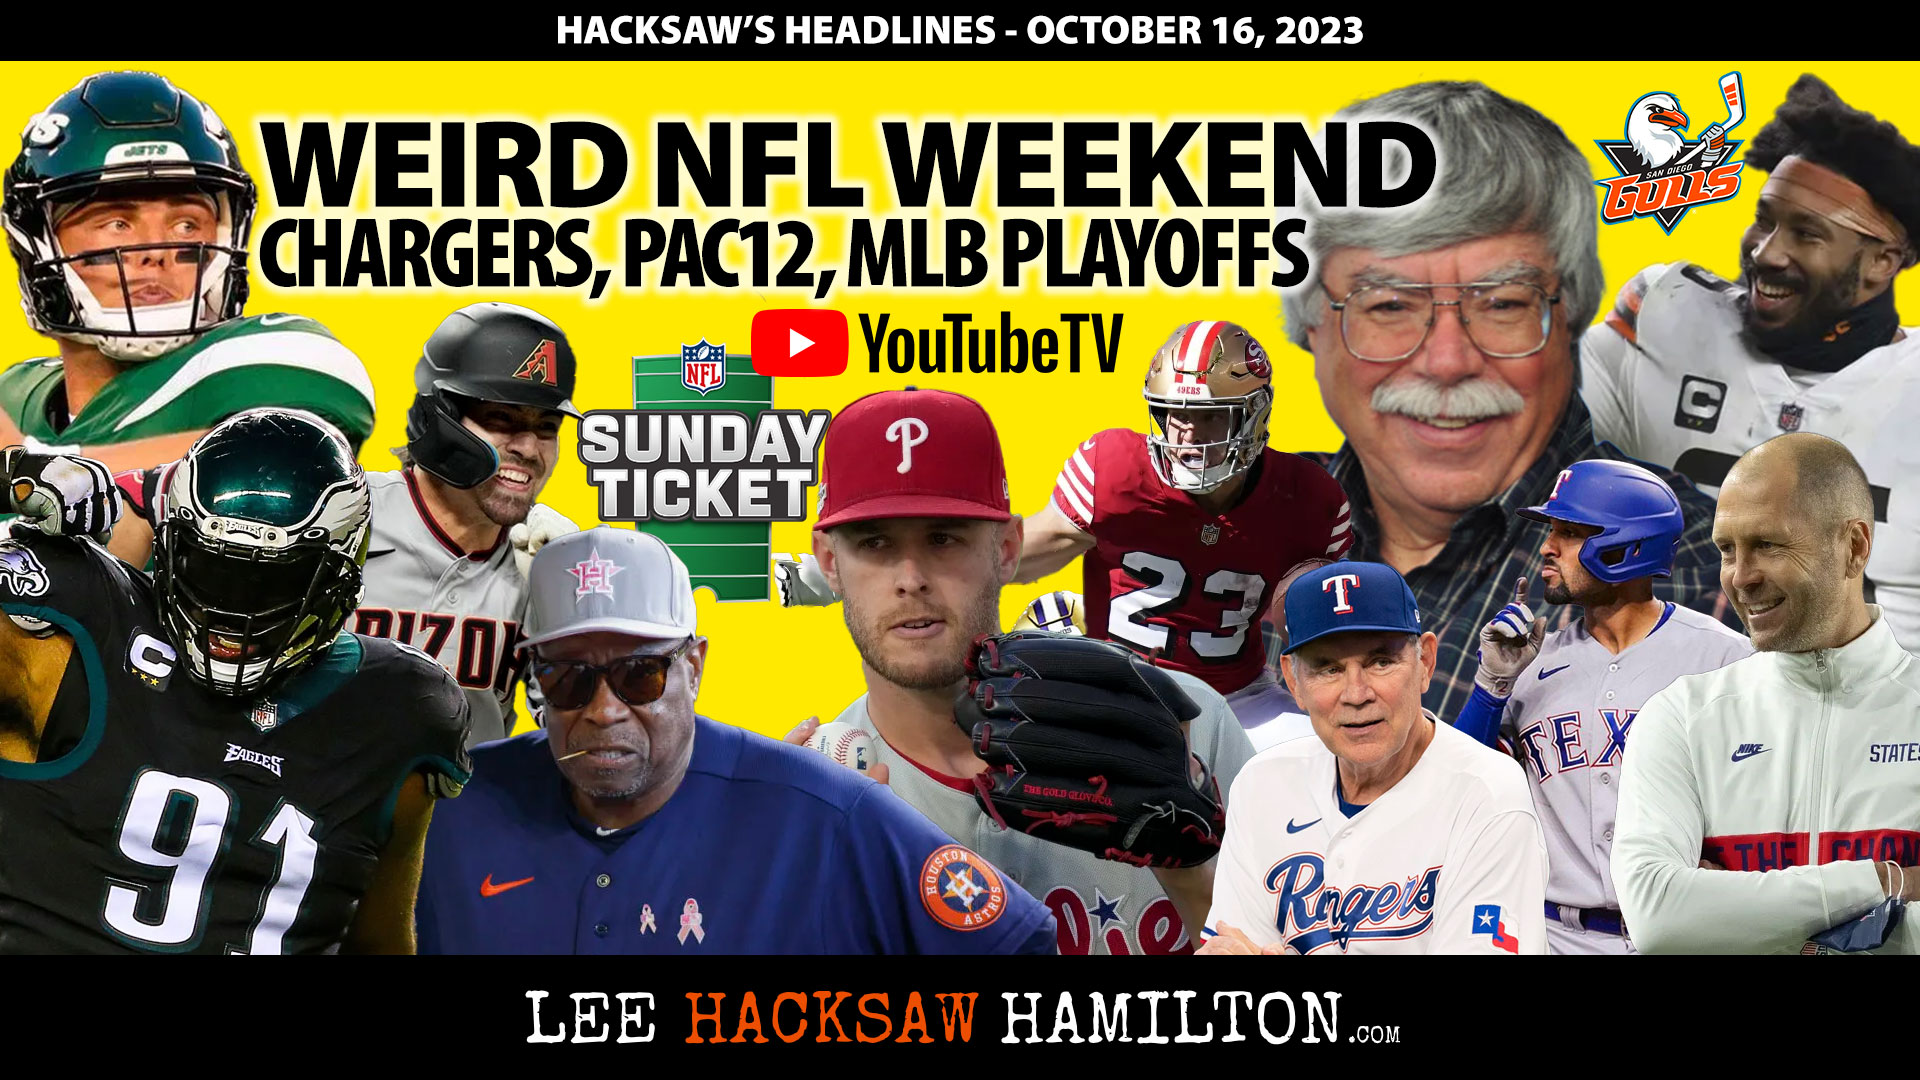 Lee Hacksaw Hamilton discusses Weird NFL Weekend, Chargers, PAC12, MLB Playoffs, Gulls, Team USA